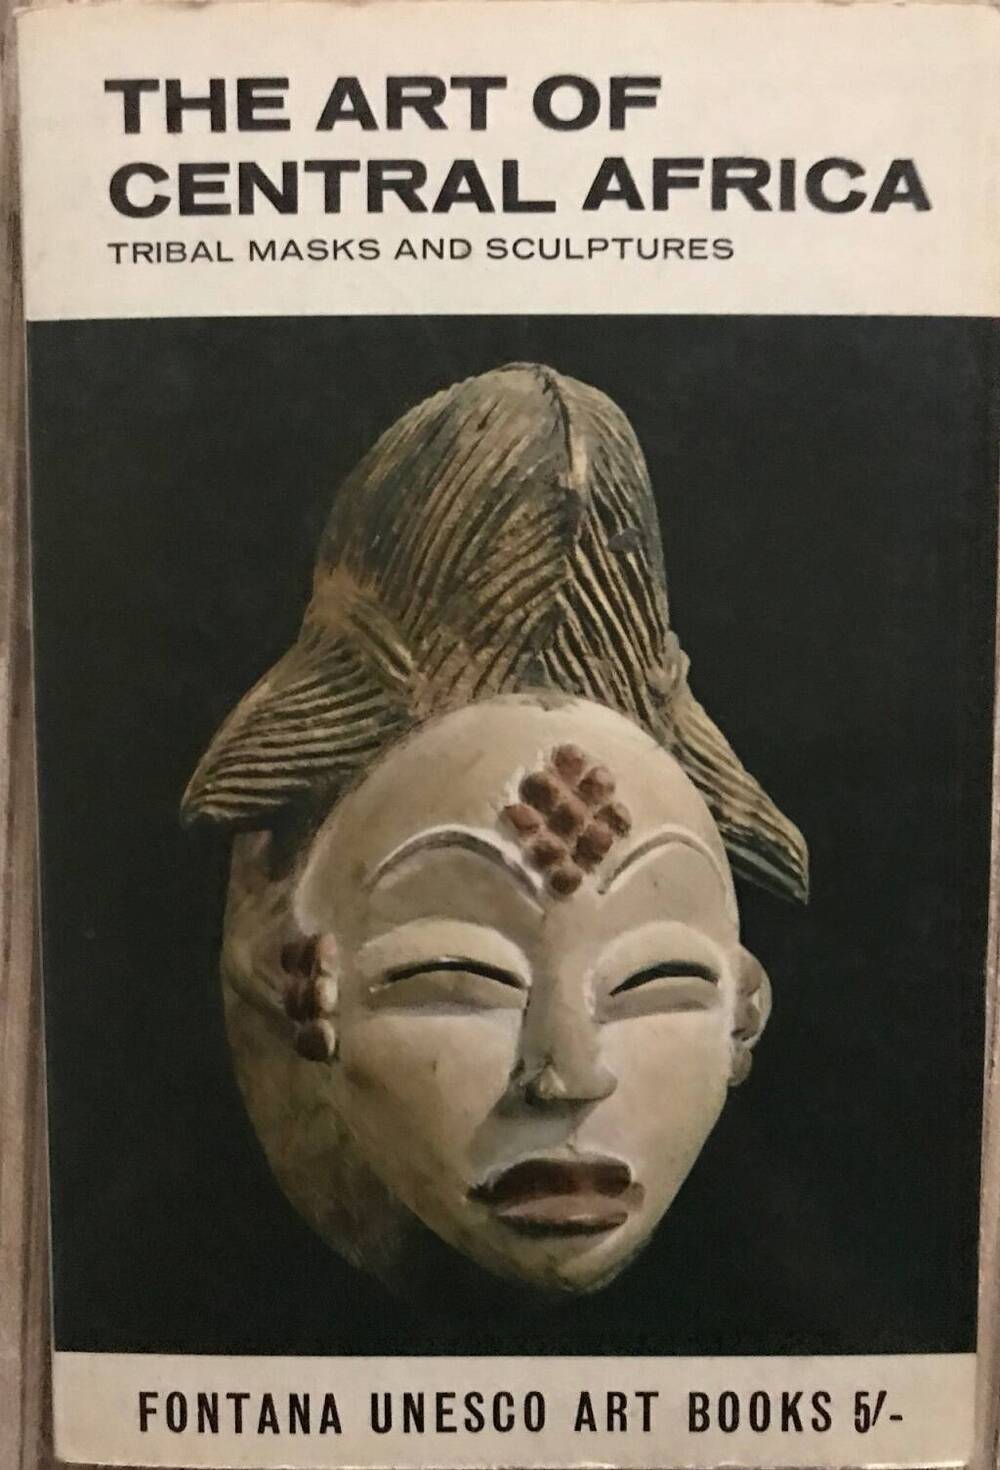 Книга.Fagg W. The art of Central Africa: tribal masks and sculptures / William Fagg;
Mario Carrieri (Photographer). - [London]: Collins in association with UNESCO, 1967 -
24, [2] с.: ил., [32] л. ил., [1] л. (слож. втрое). - (Fontana UNESCO Art Books). – На
английском языке.
